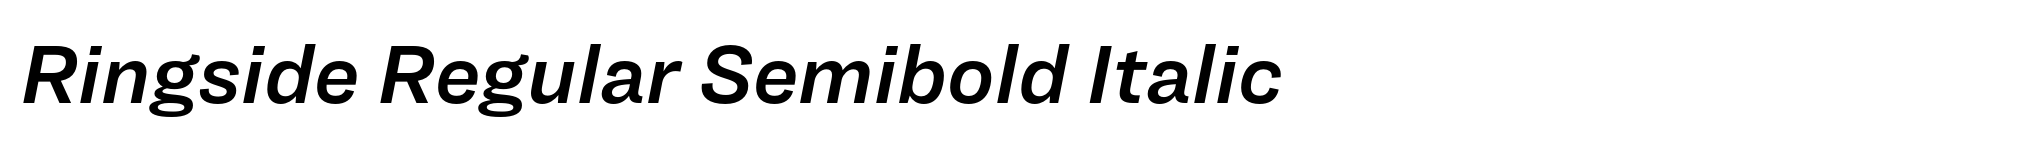 Ringside Regular Semibold Italic image